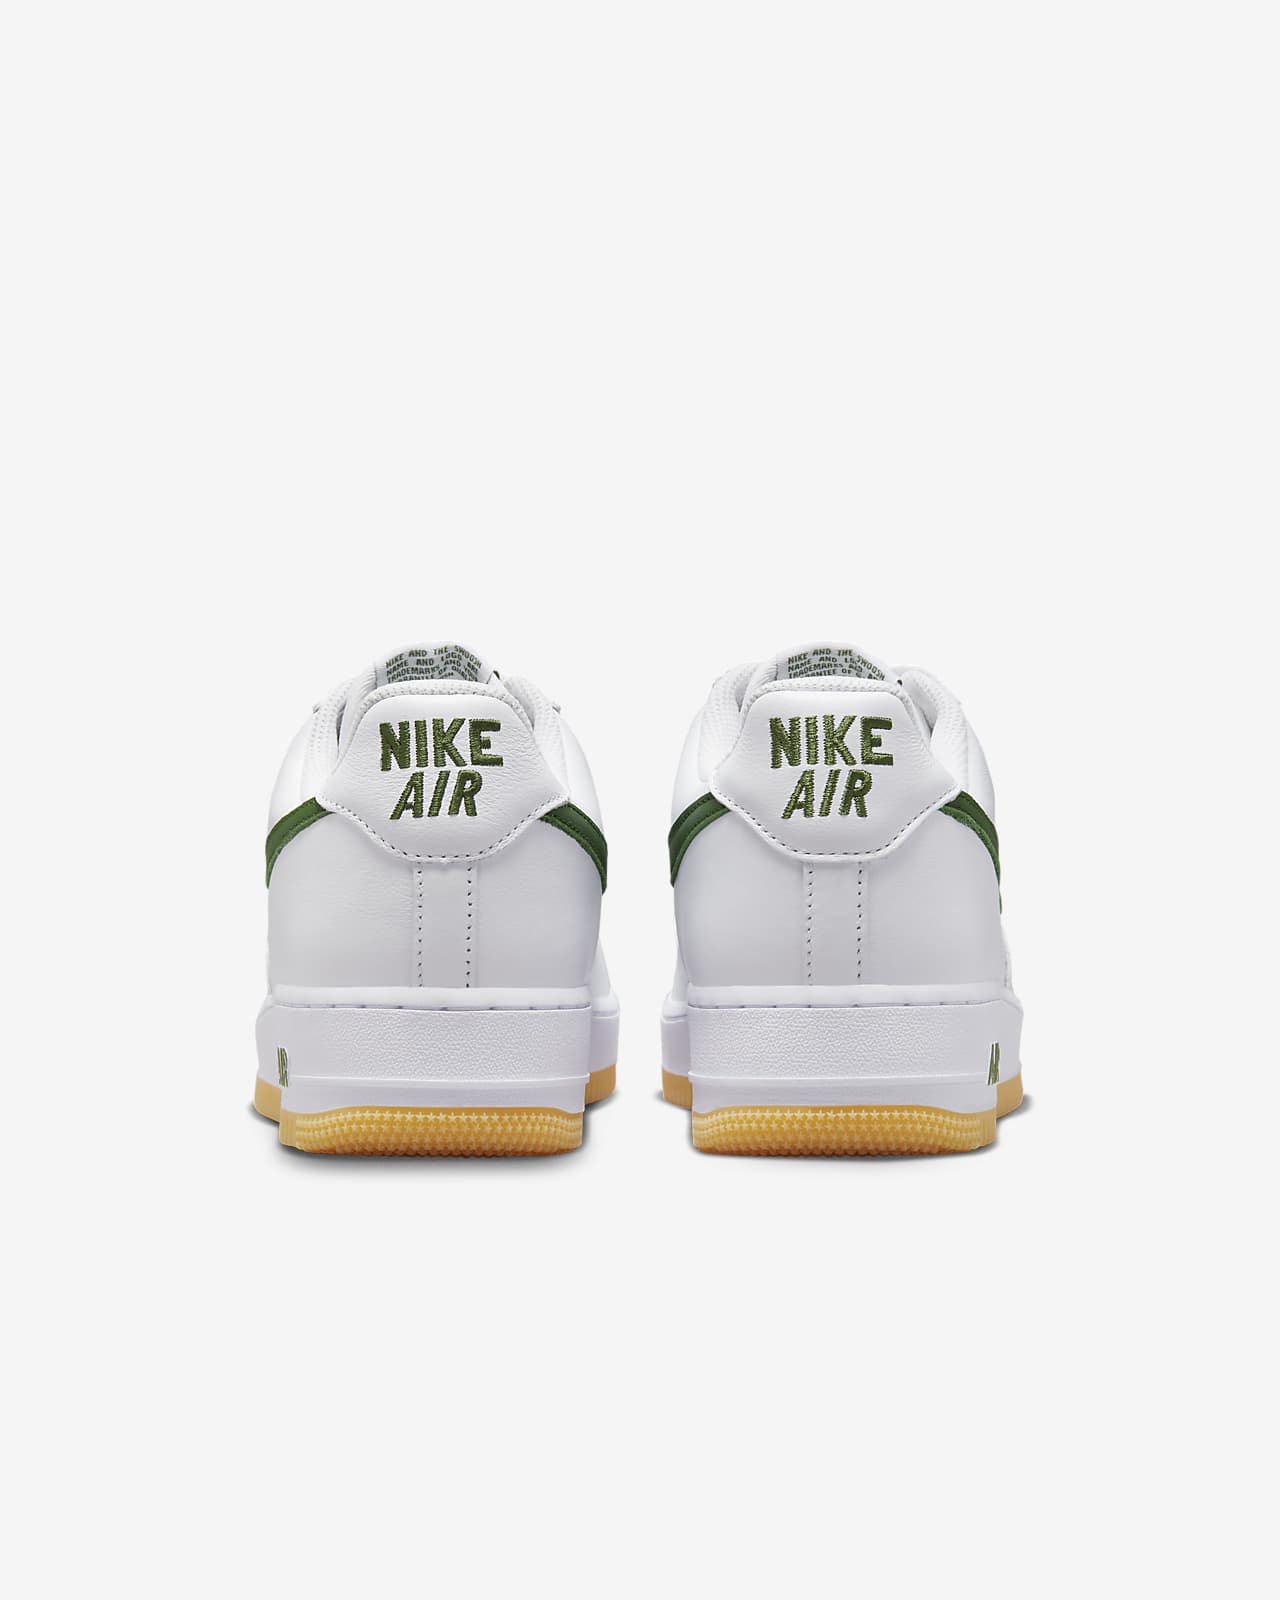 Nike Air force 1 07 LV8 white green Size 11 Men’s